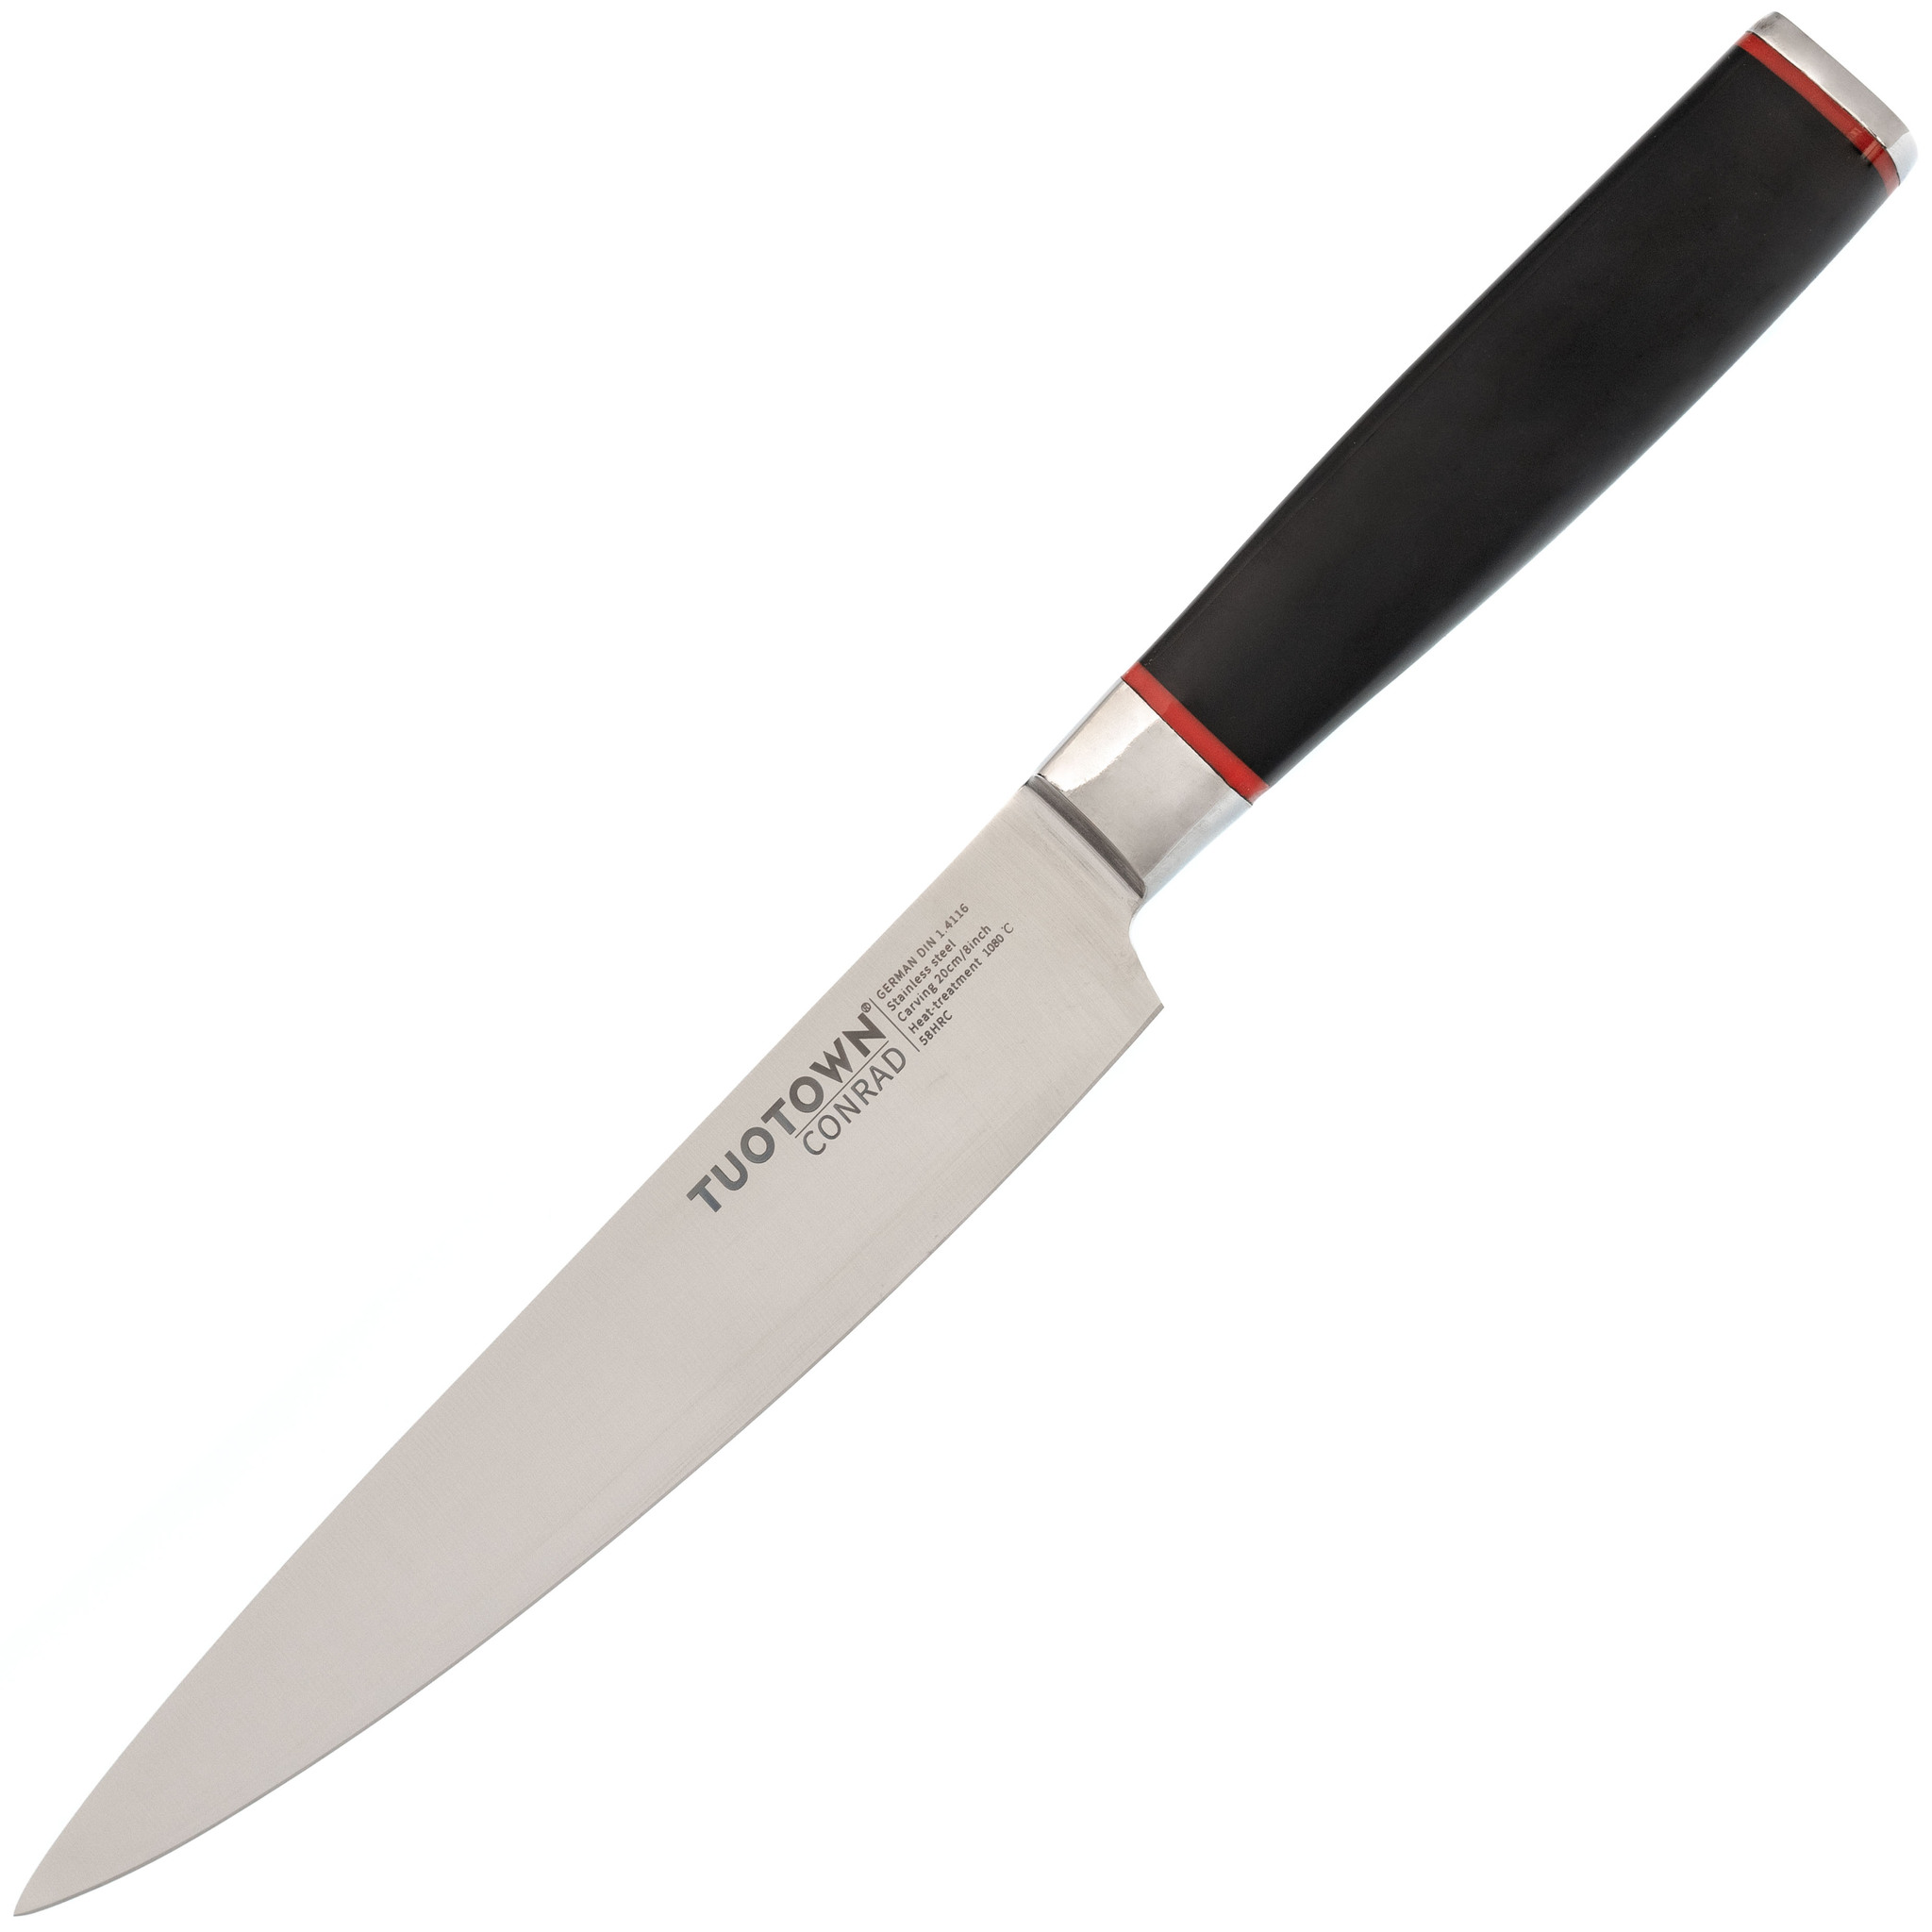 Кухонный нож для нарезки Tuotown, серия CONRAD, сталь 1.4116 - фото 1